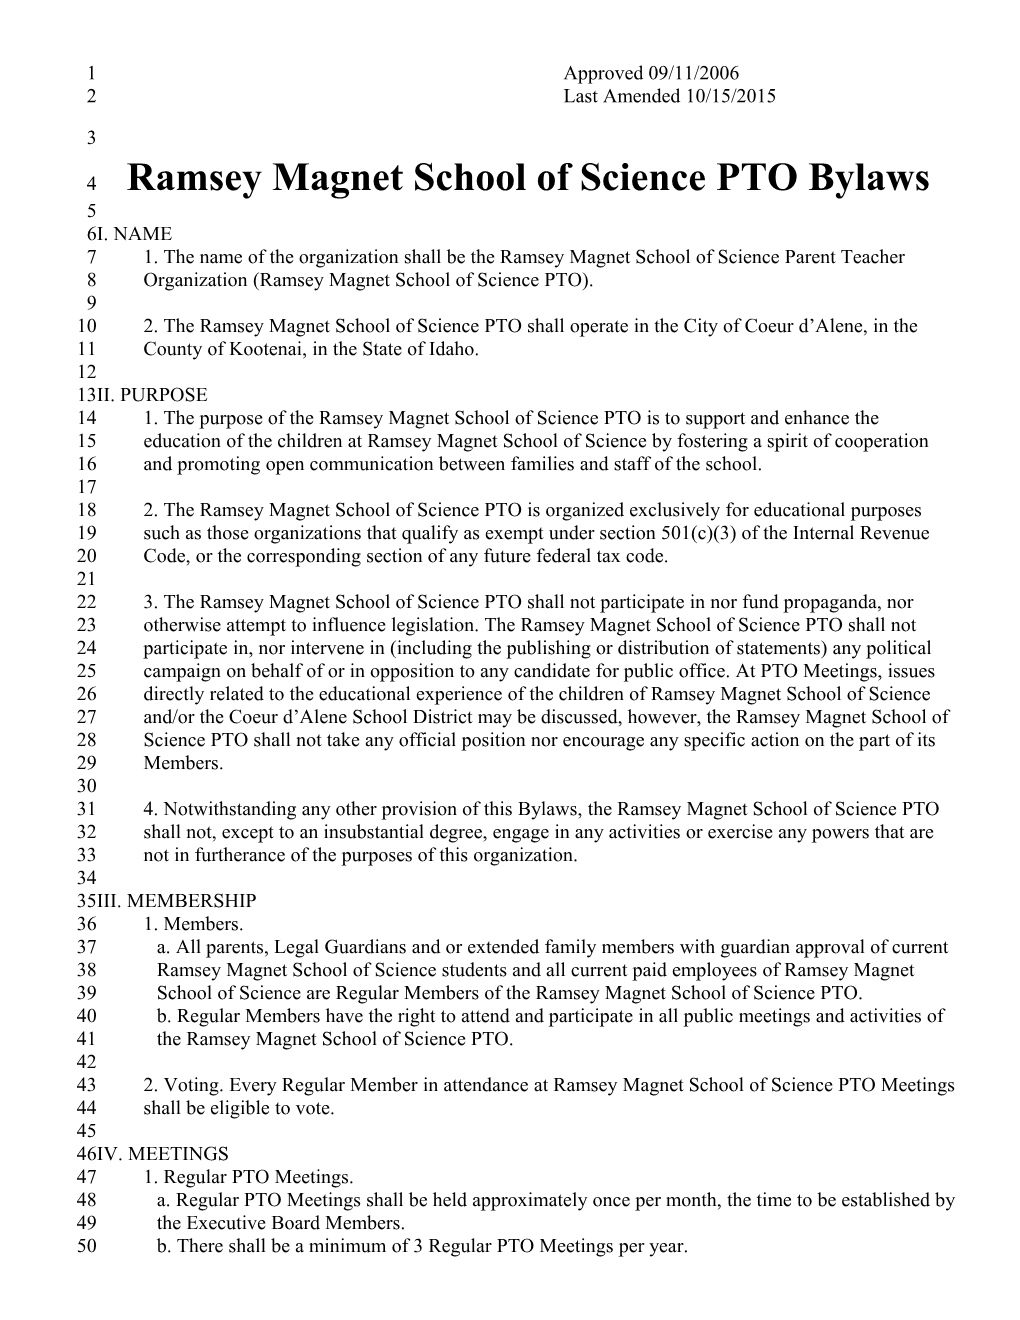 Ramsey Magnet School of Science Ptobylaws